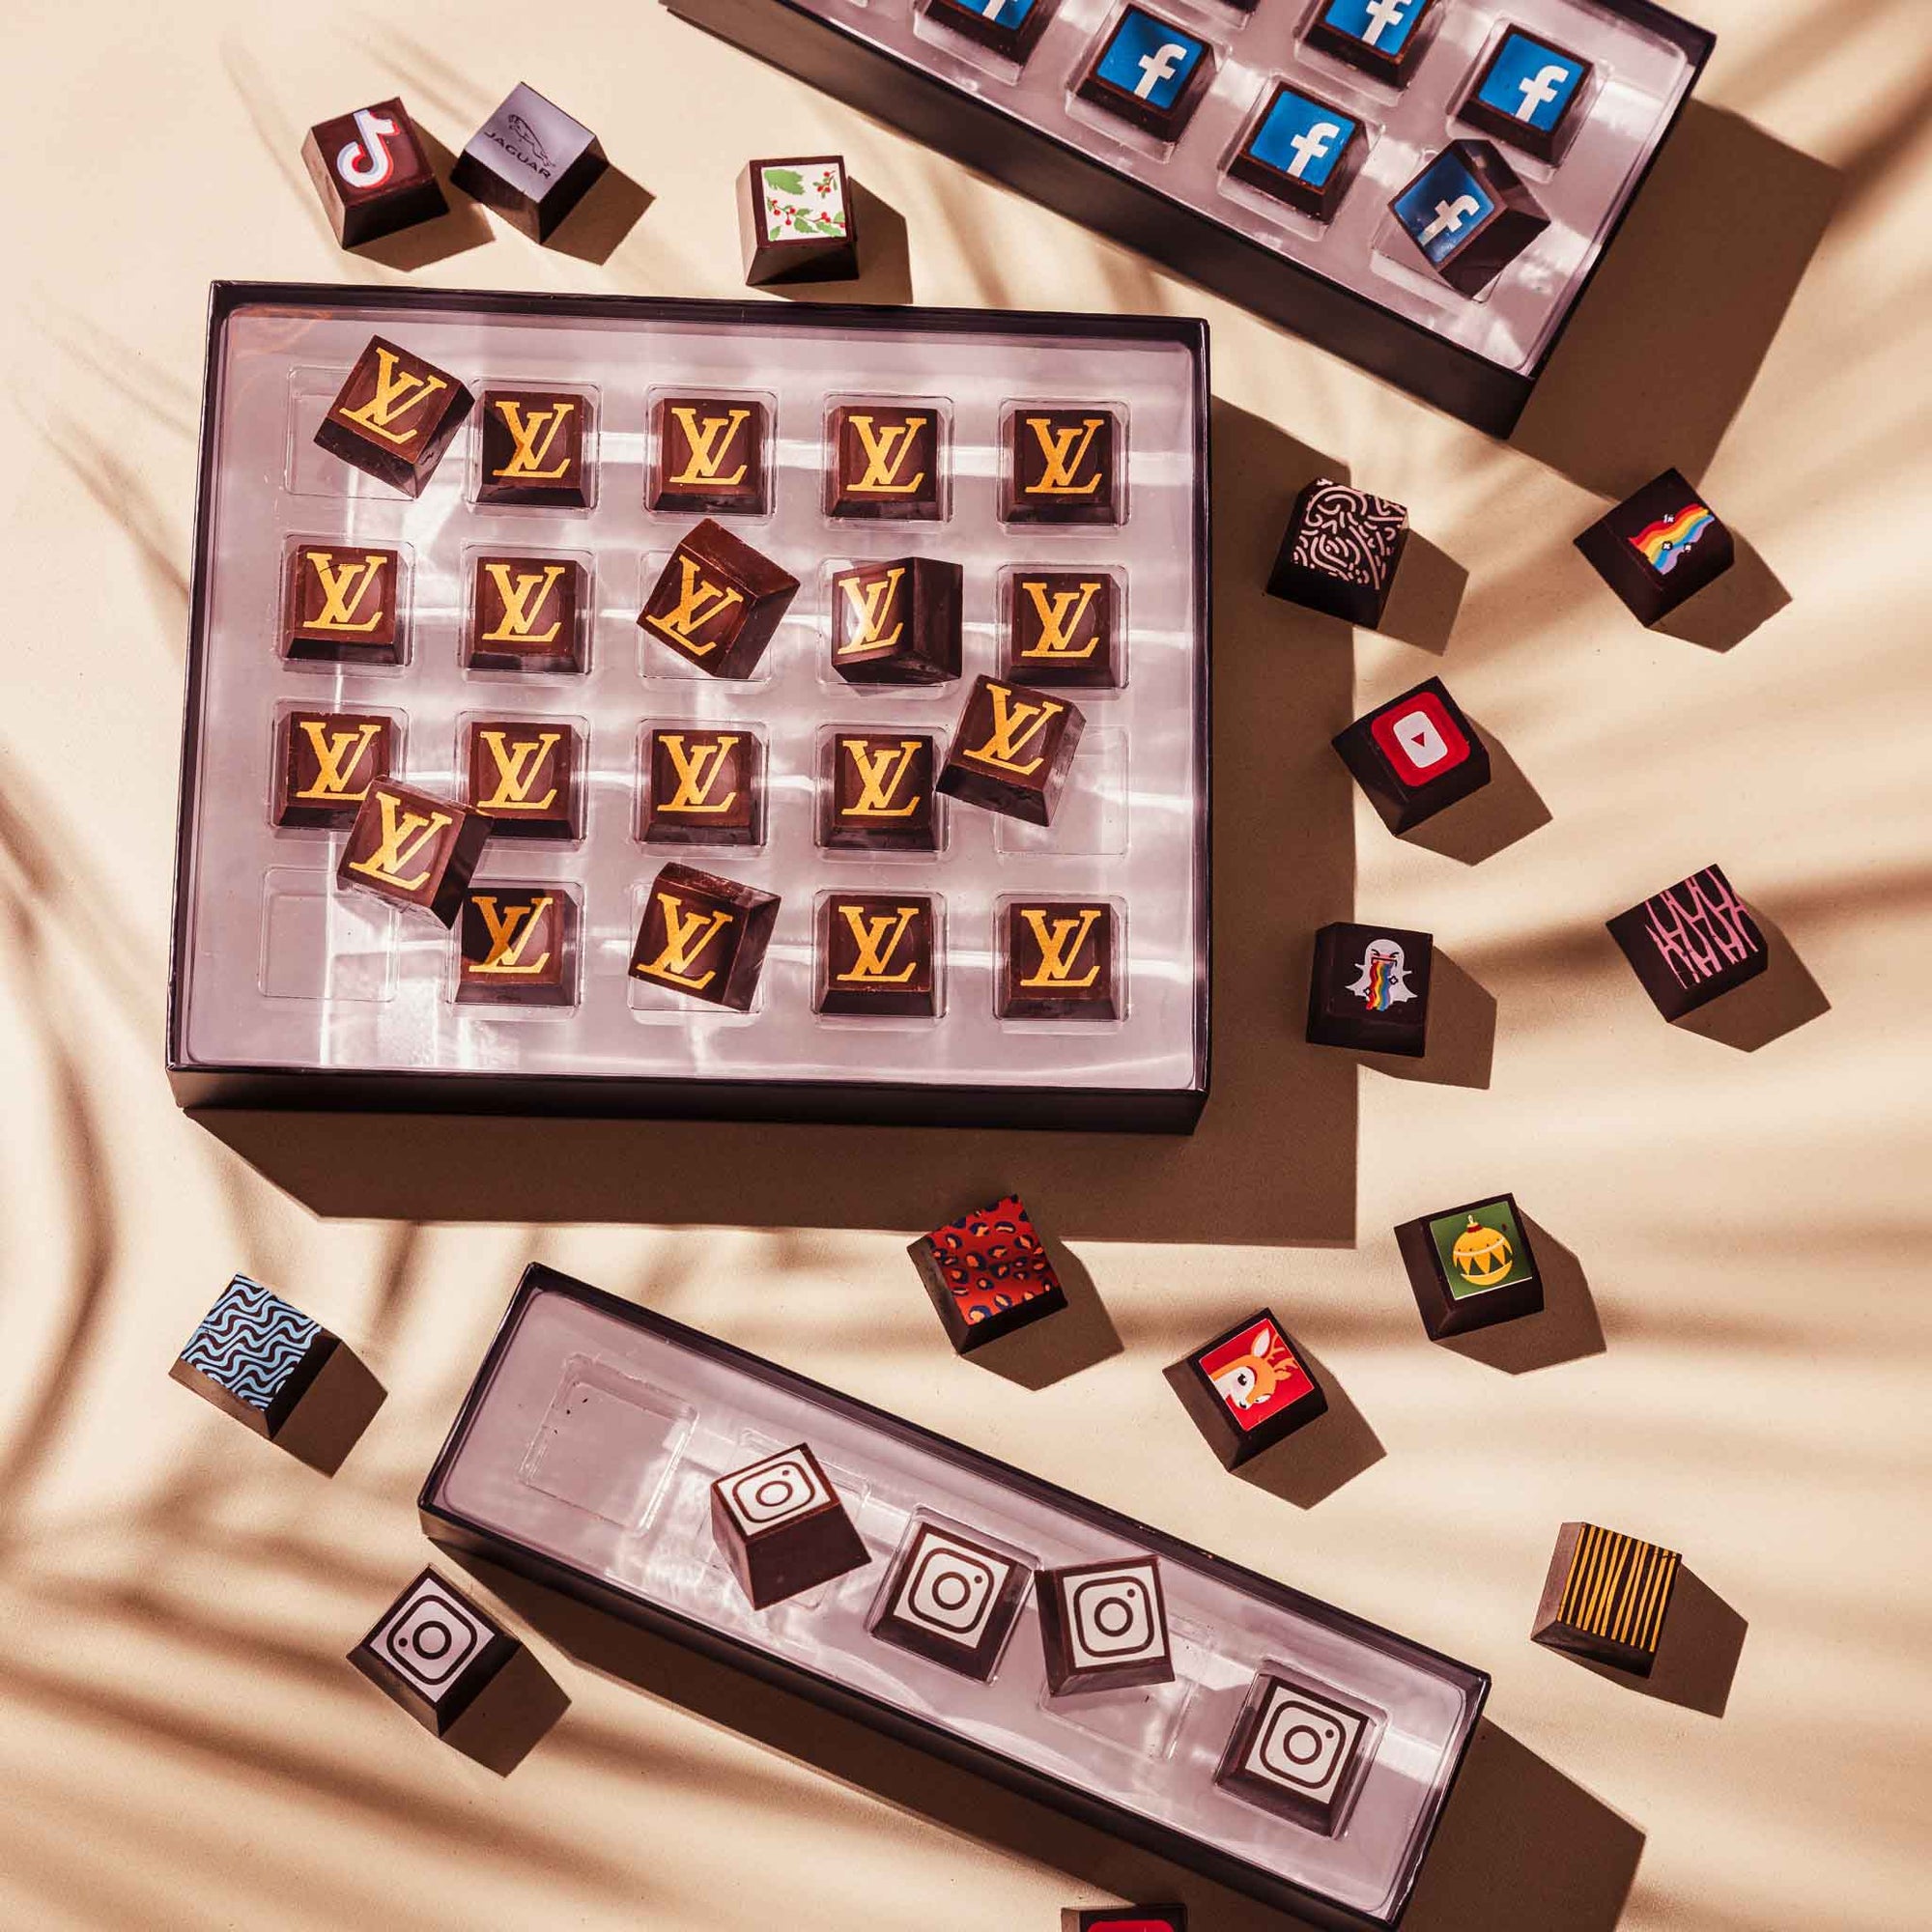 An open box of custom chocolate truffle boxes	